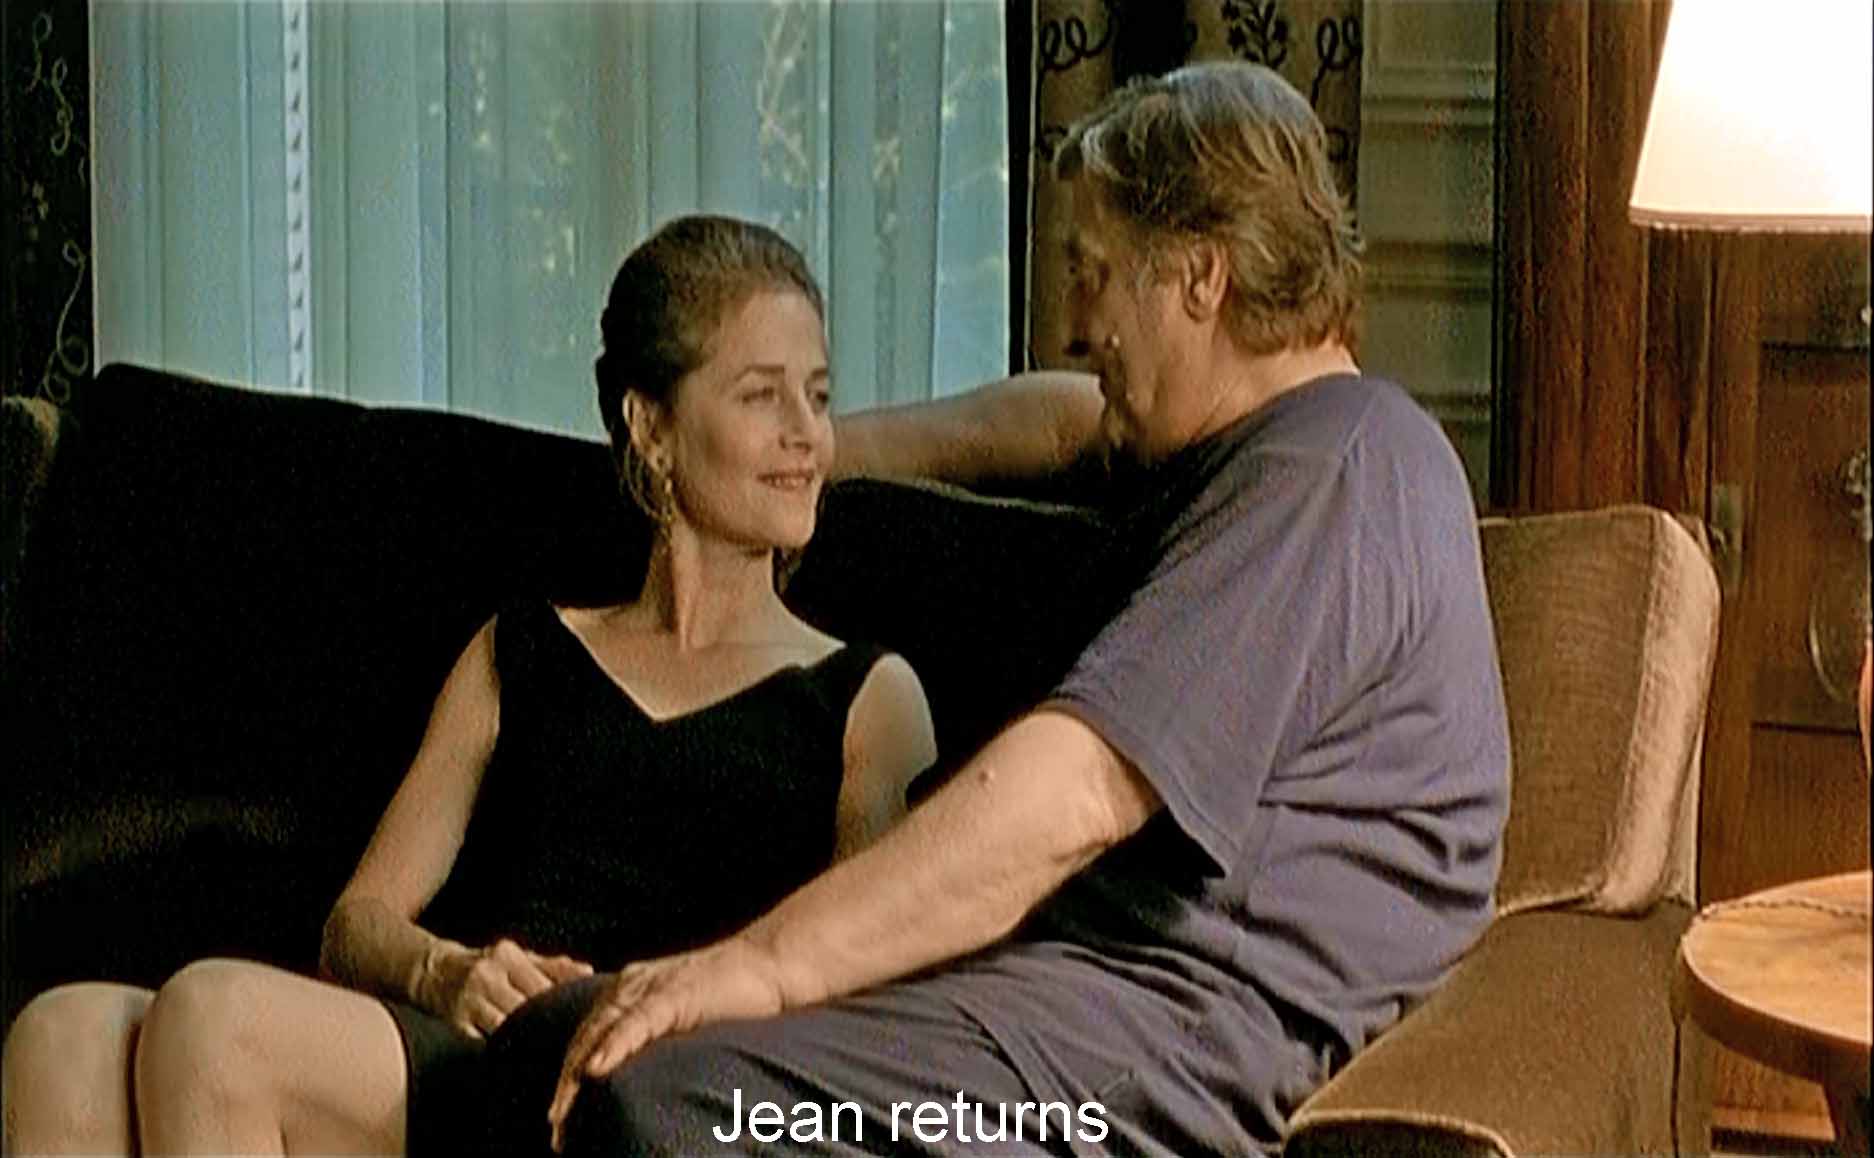 Jean returns